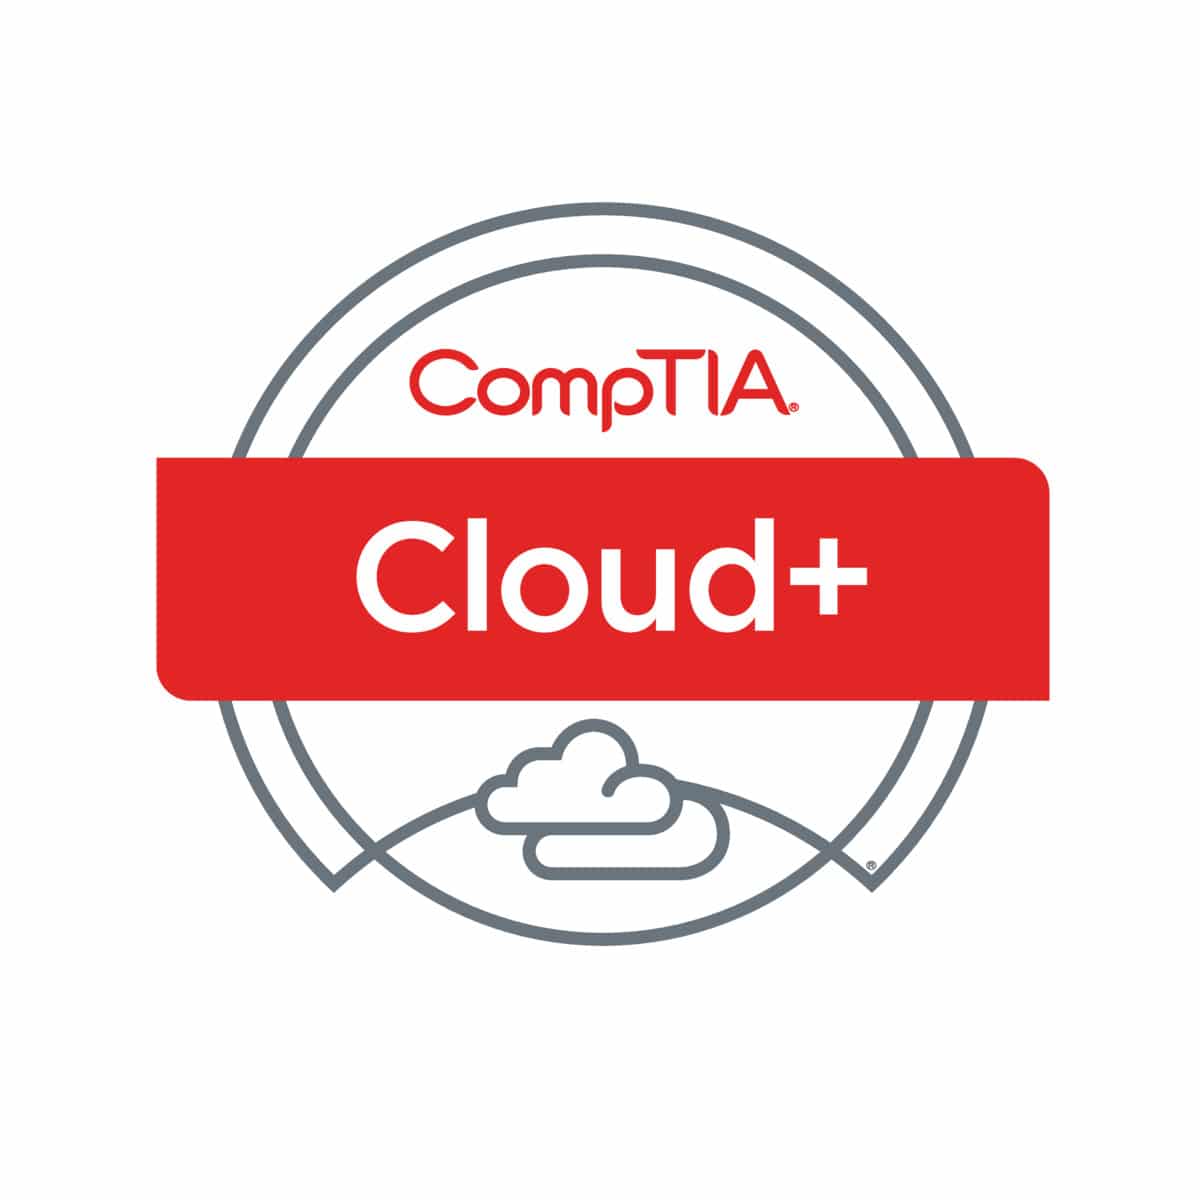 CompTIA Cloud+ CV0-002 Practice Exam